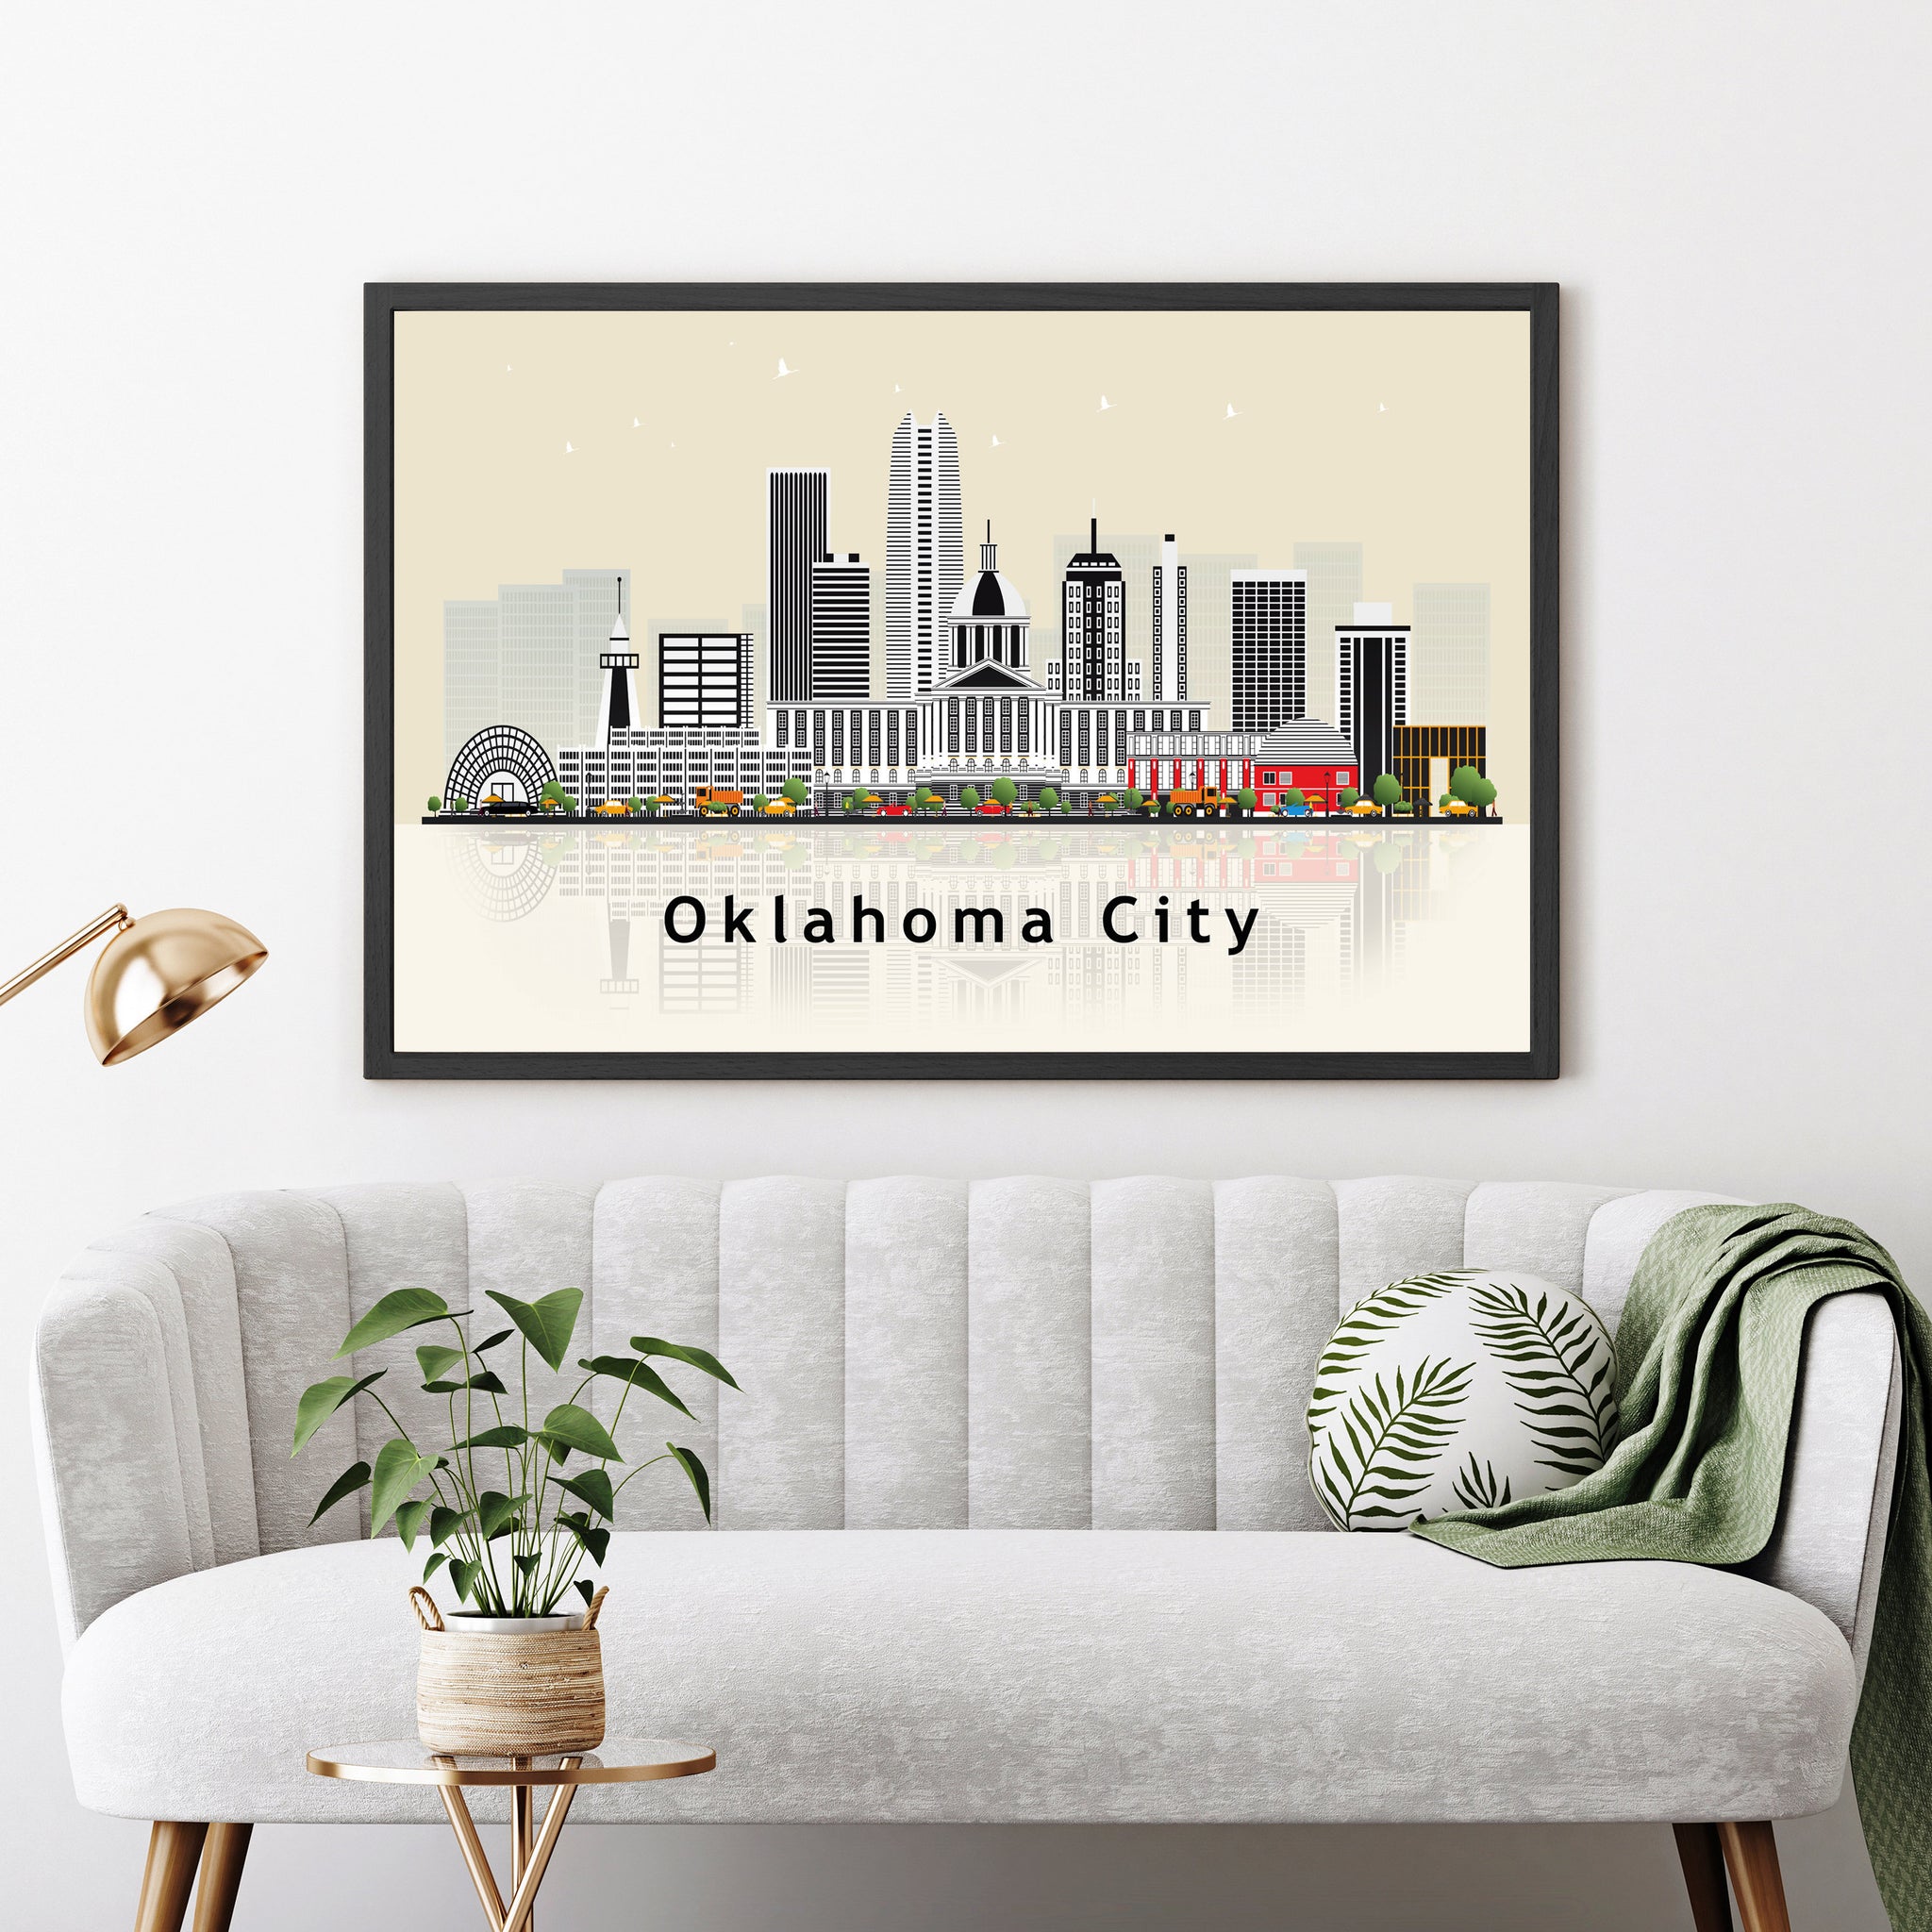 OKLAHOMA CITY OKLAHOMA Illustration skyline poster, Oklahoma modern skyline cityscape poster print, Landmark poster, Home wall decorations